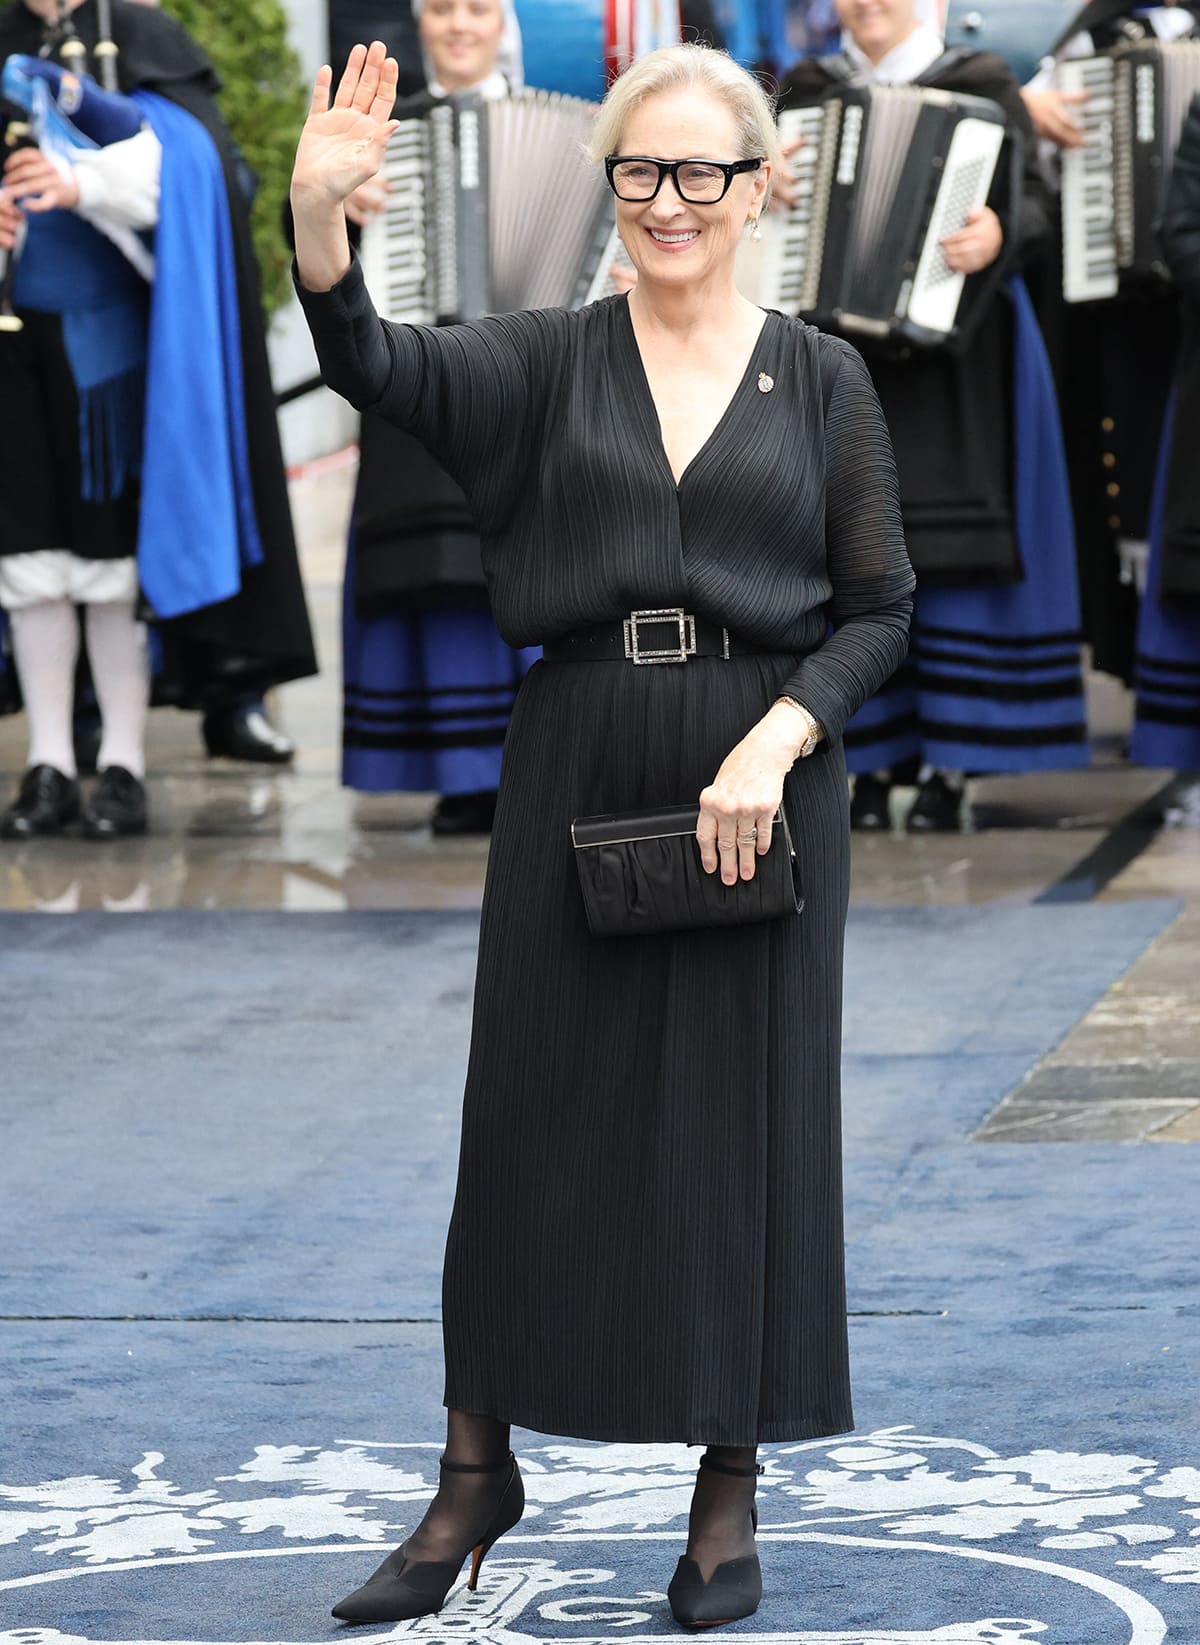 Meryl Streep embraces quiet luxury in a black plissé dress, black tights, and black heels